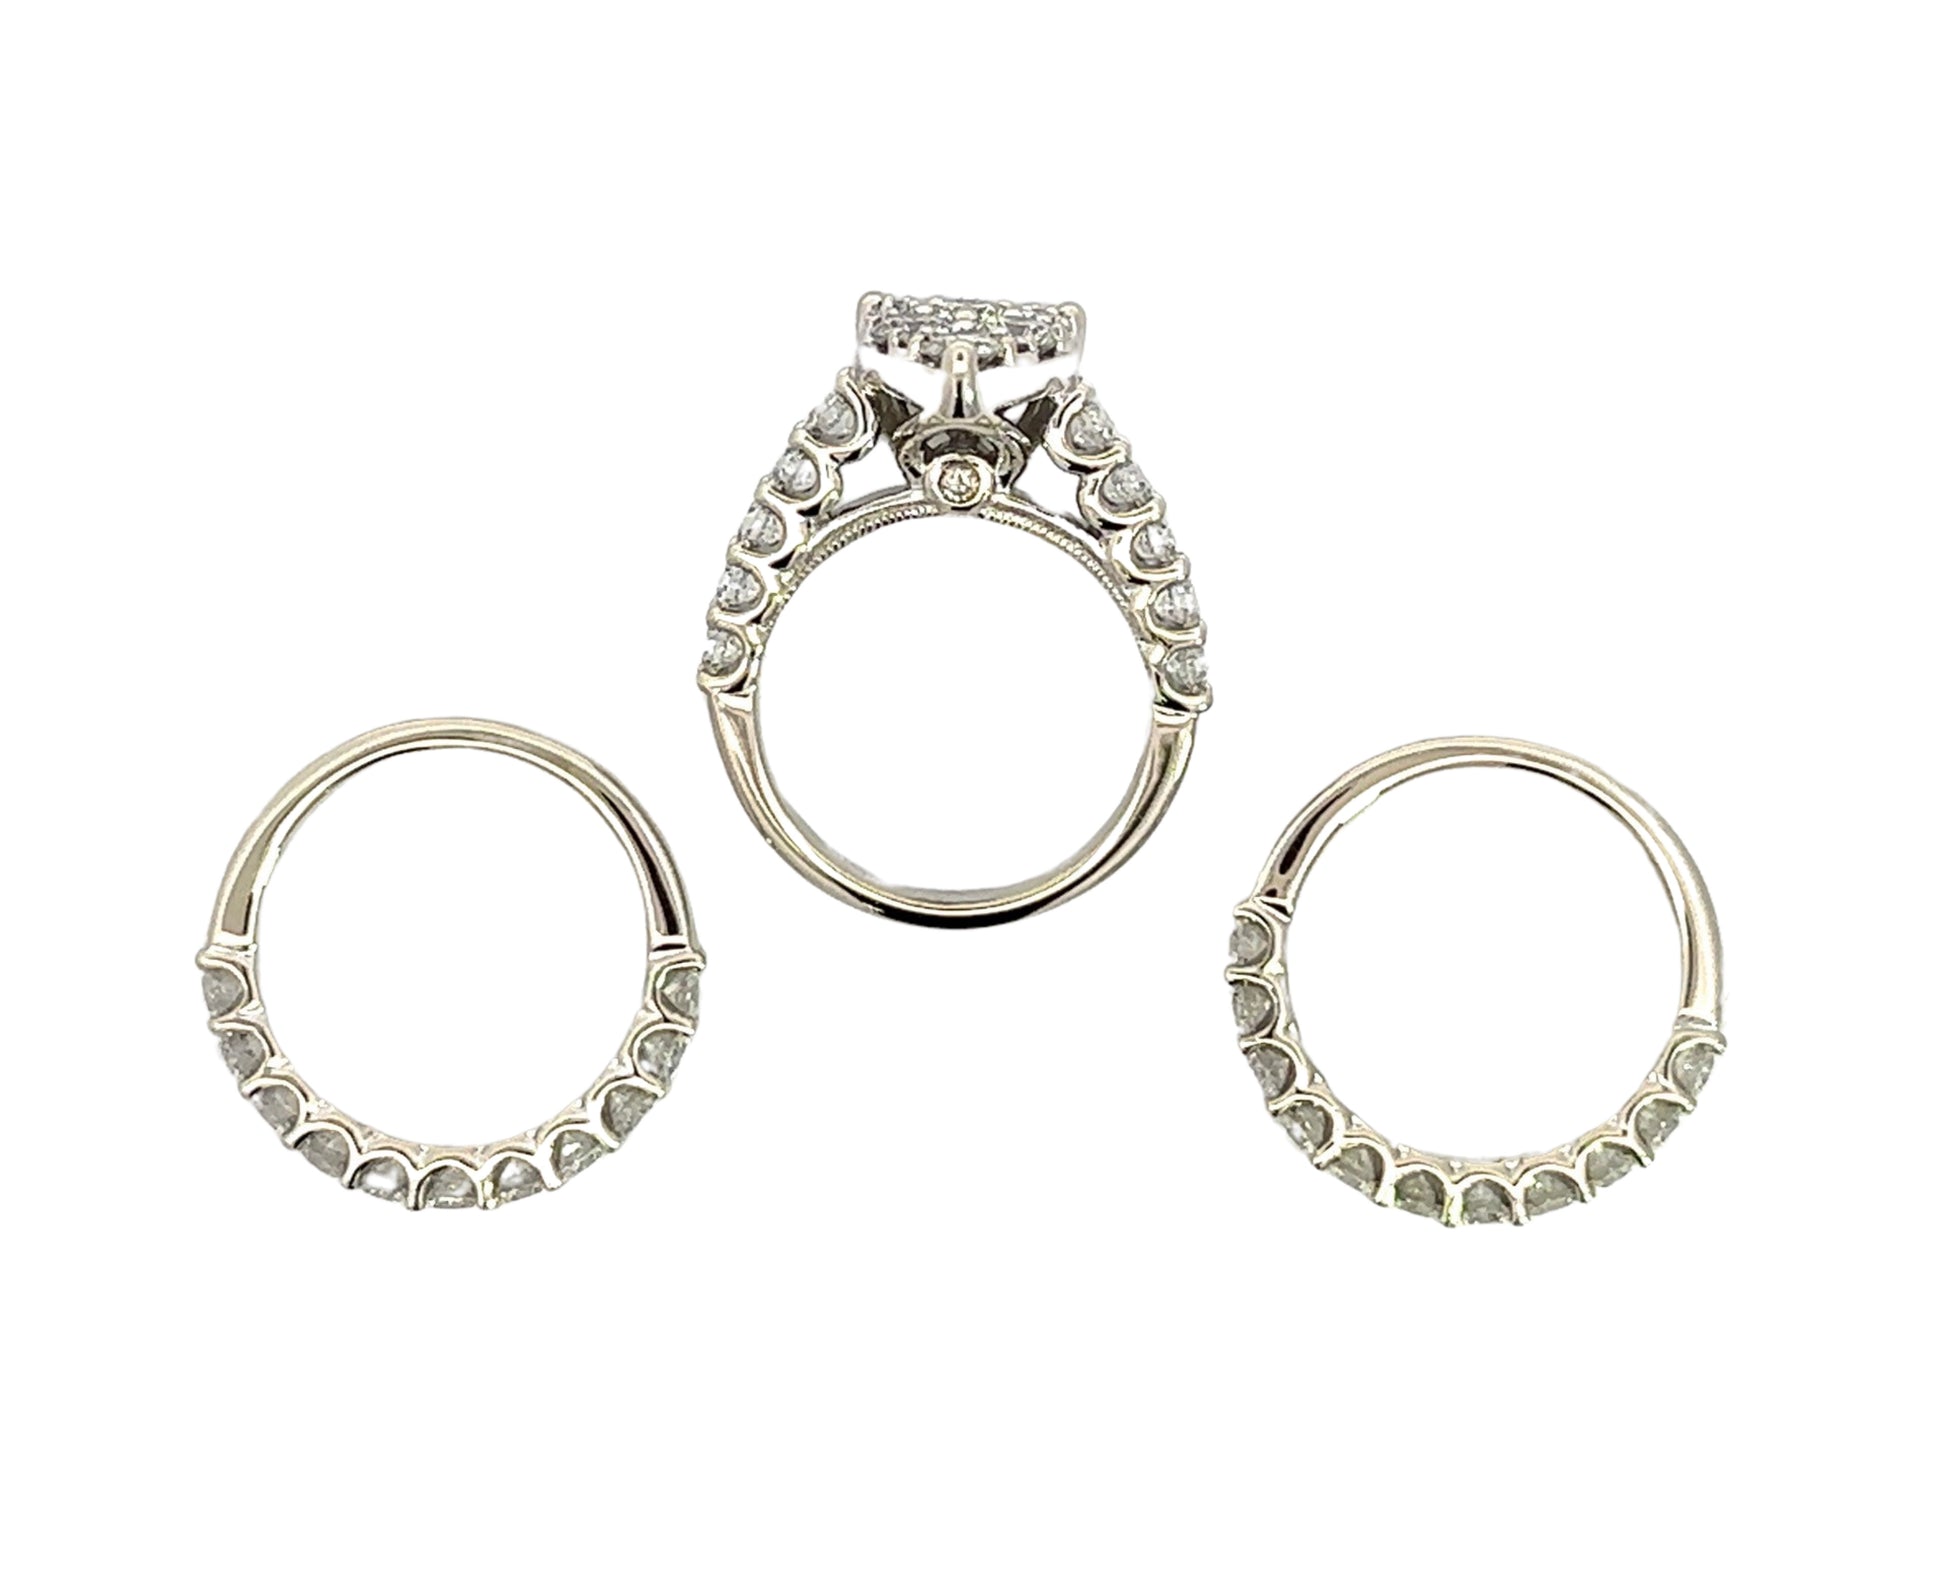 Top of wedding ring set with diamond detailing